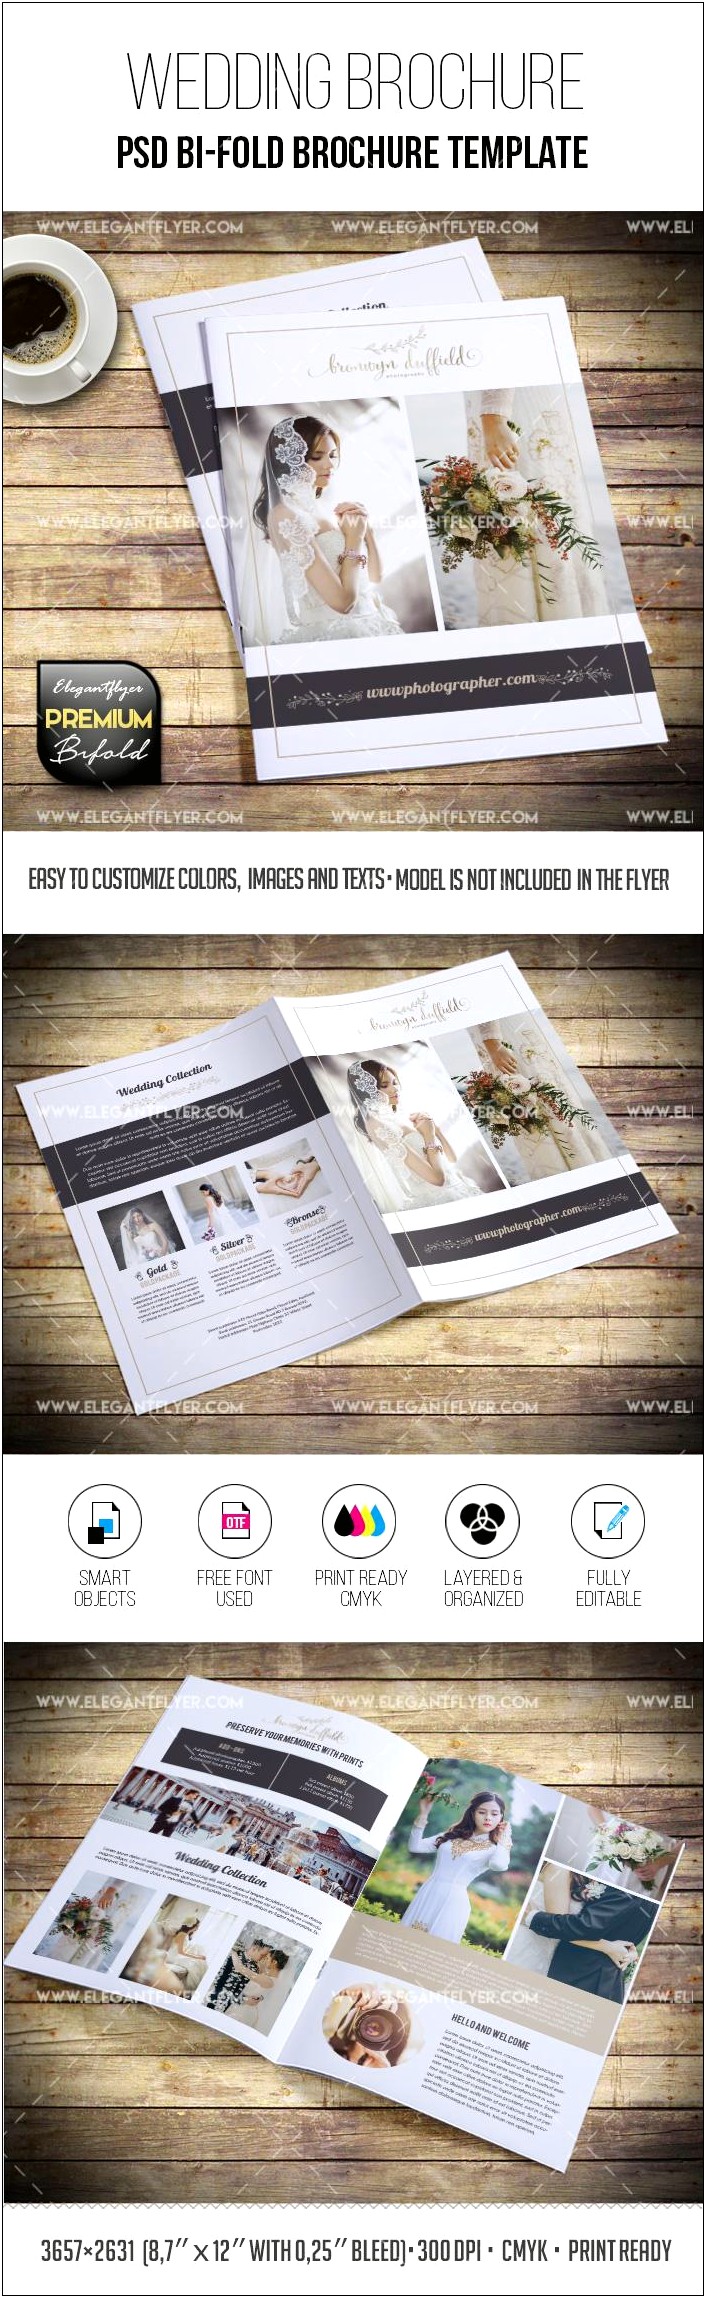 bi-fold-wedding-program-template-free-resume-example-gallery